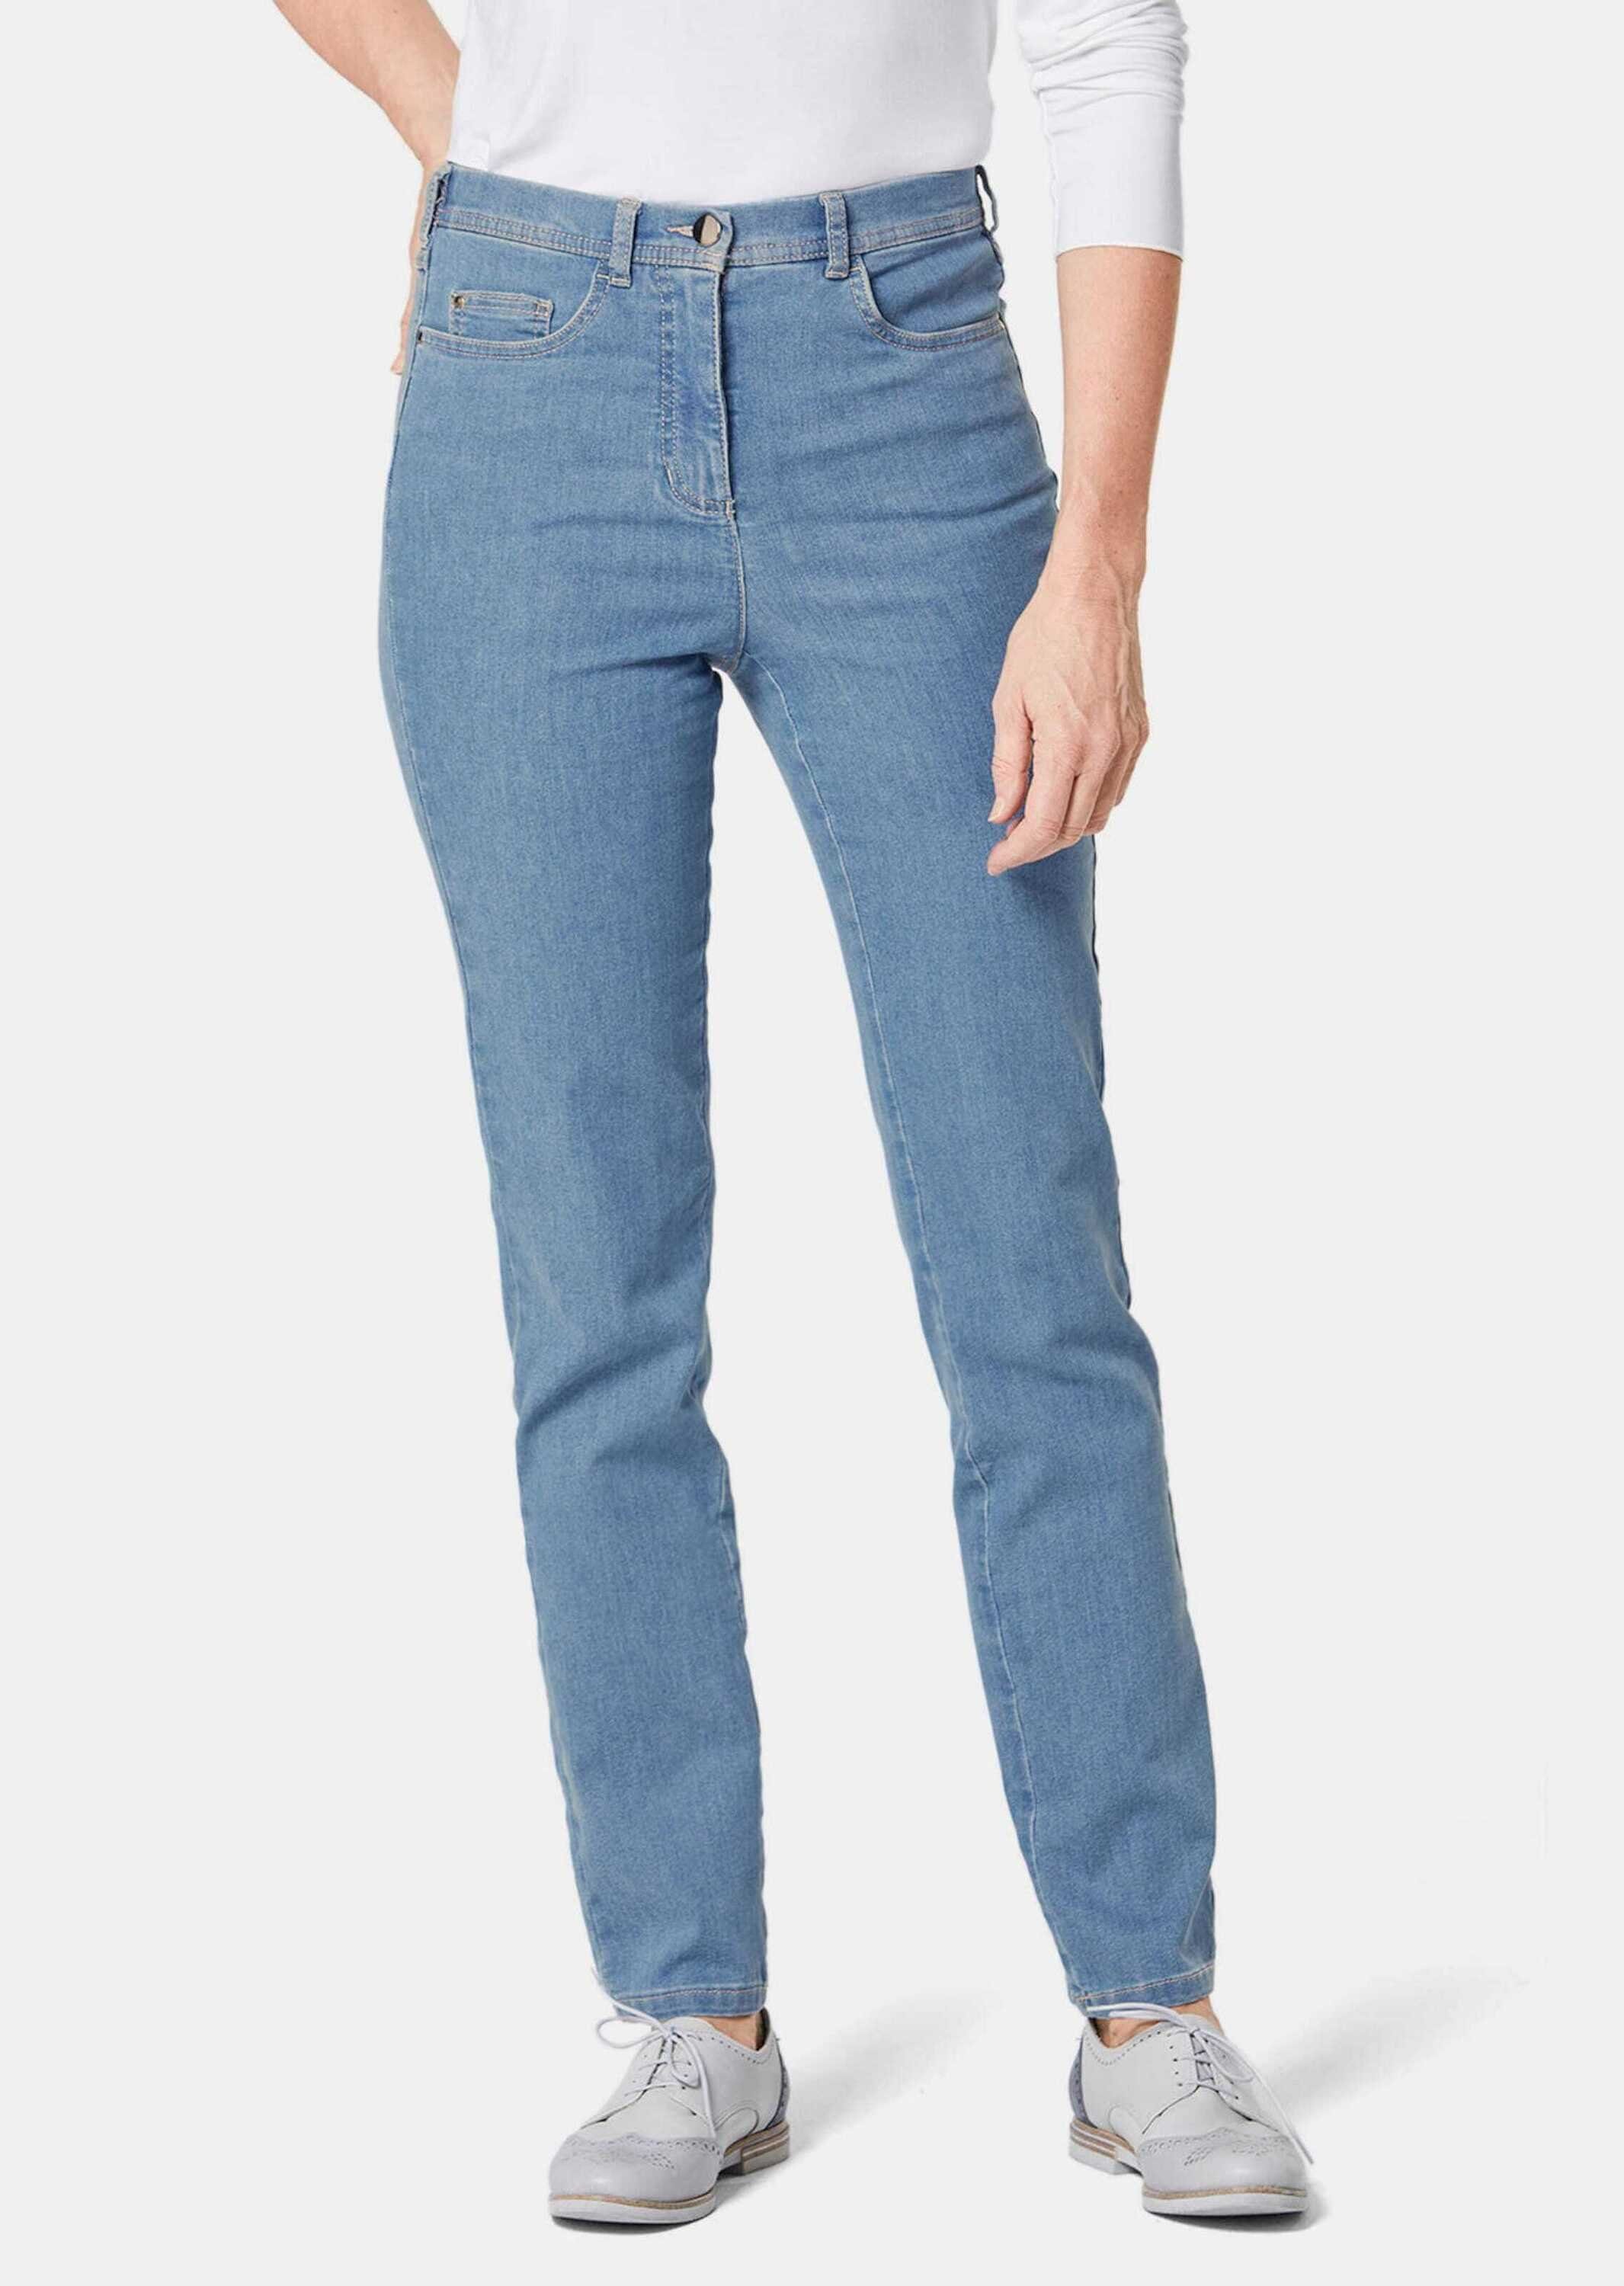 GOLDNER Bequeme Jeans Kurzgröße: Bequeme High-Stretch-Jeanshose hellblau